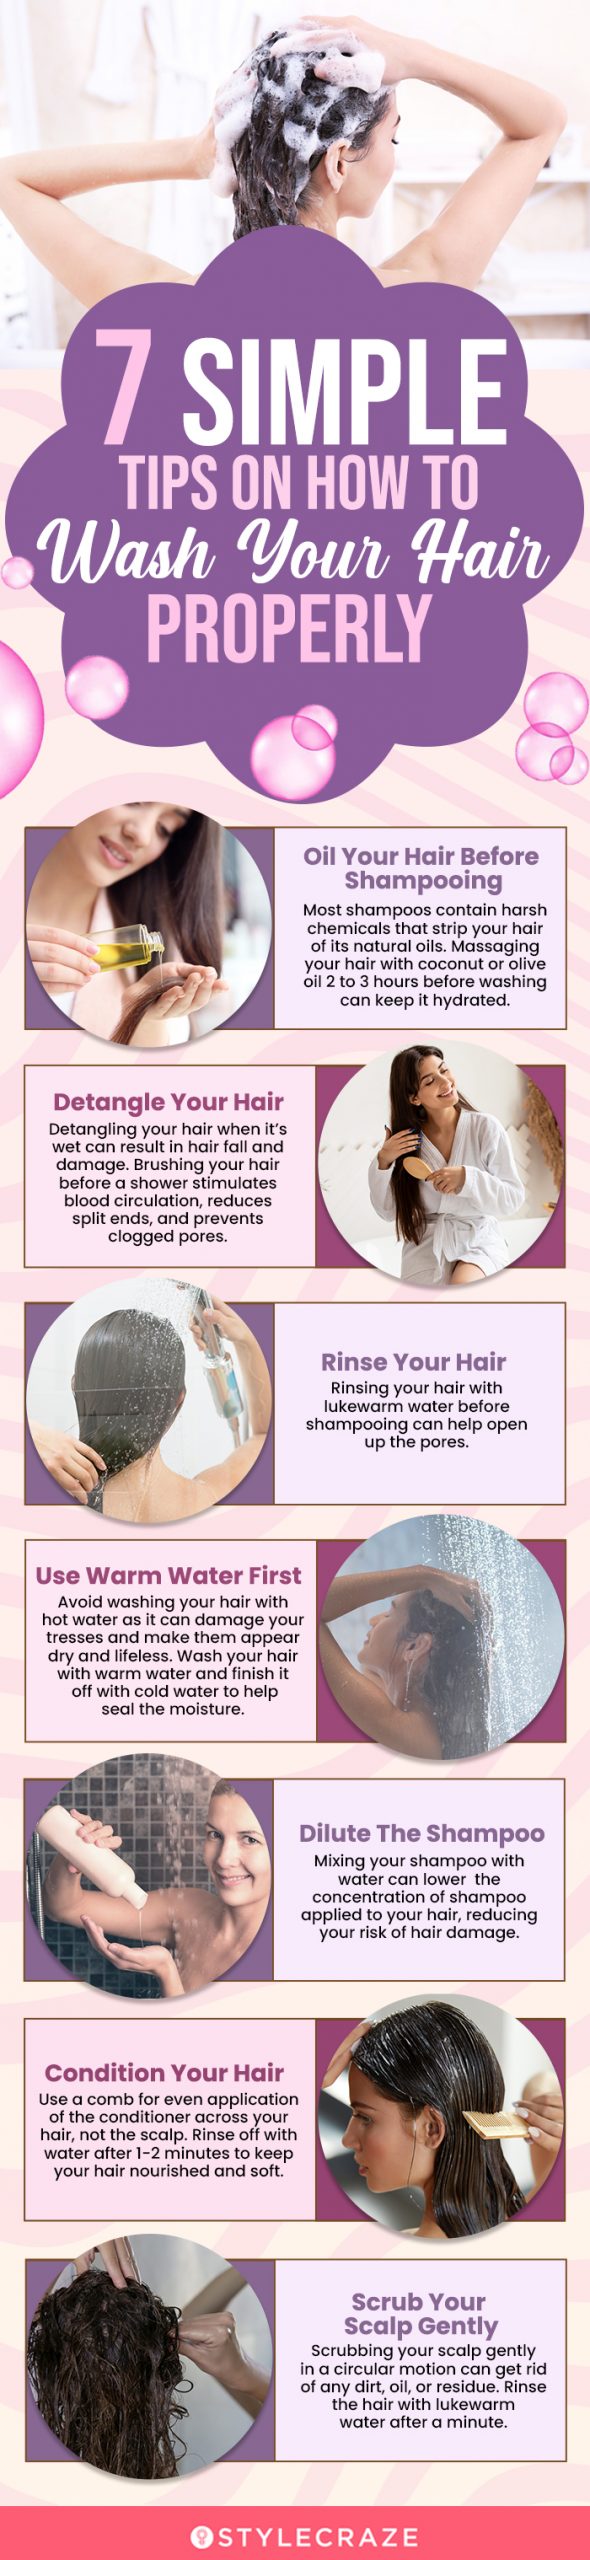 Dermatologist Explains How You Should Wash Your Hair After a Hair  Transplant - UnitedCare